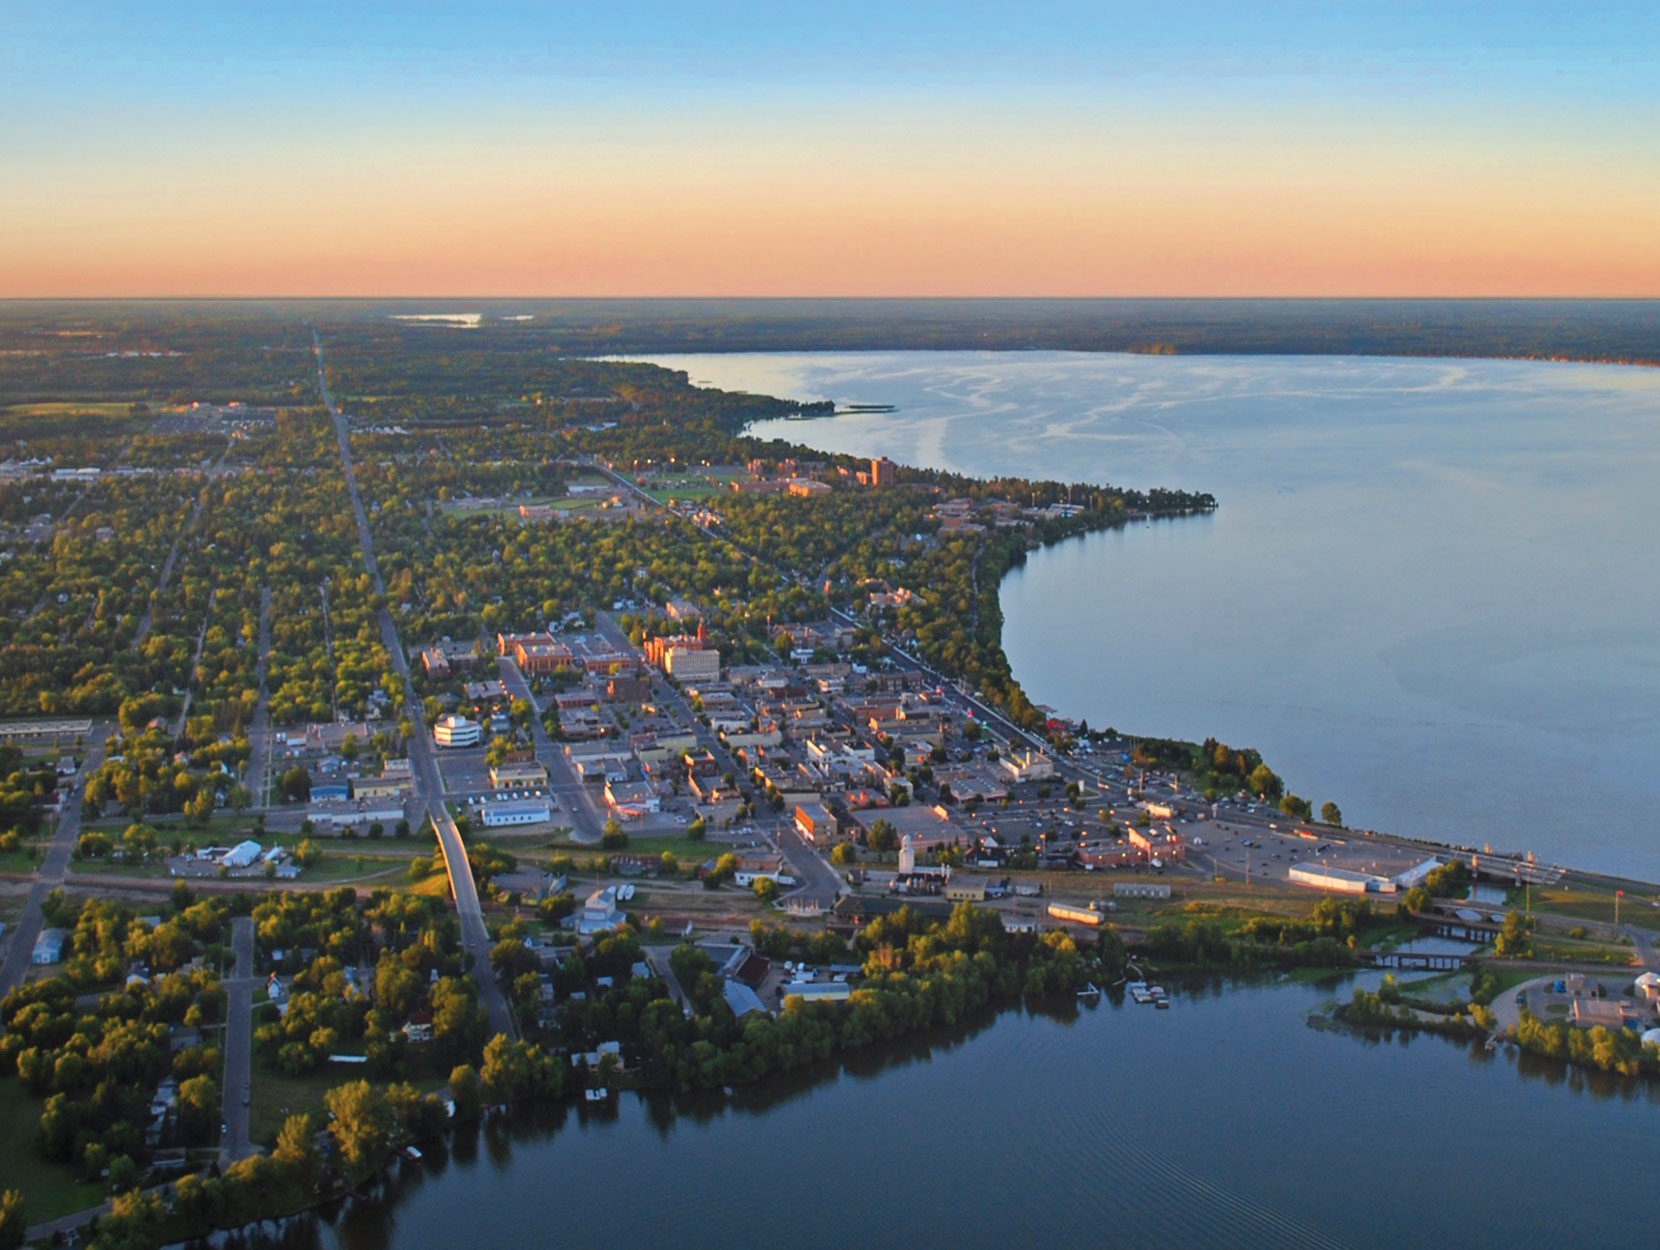 A aerial view of Bemidji and Bemidji State University along the shores of the lake